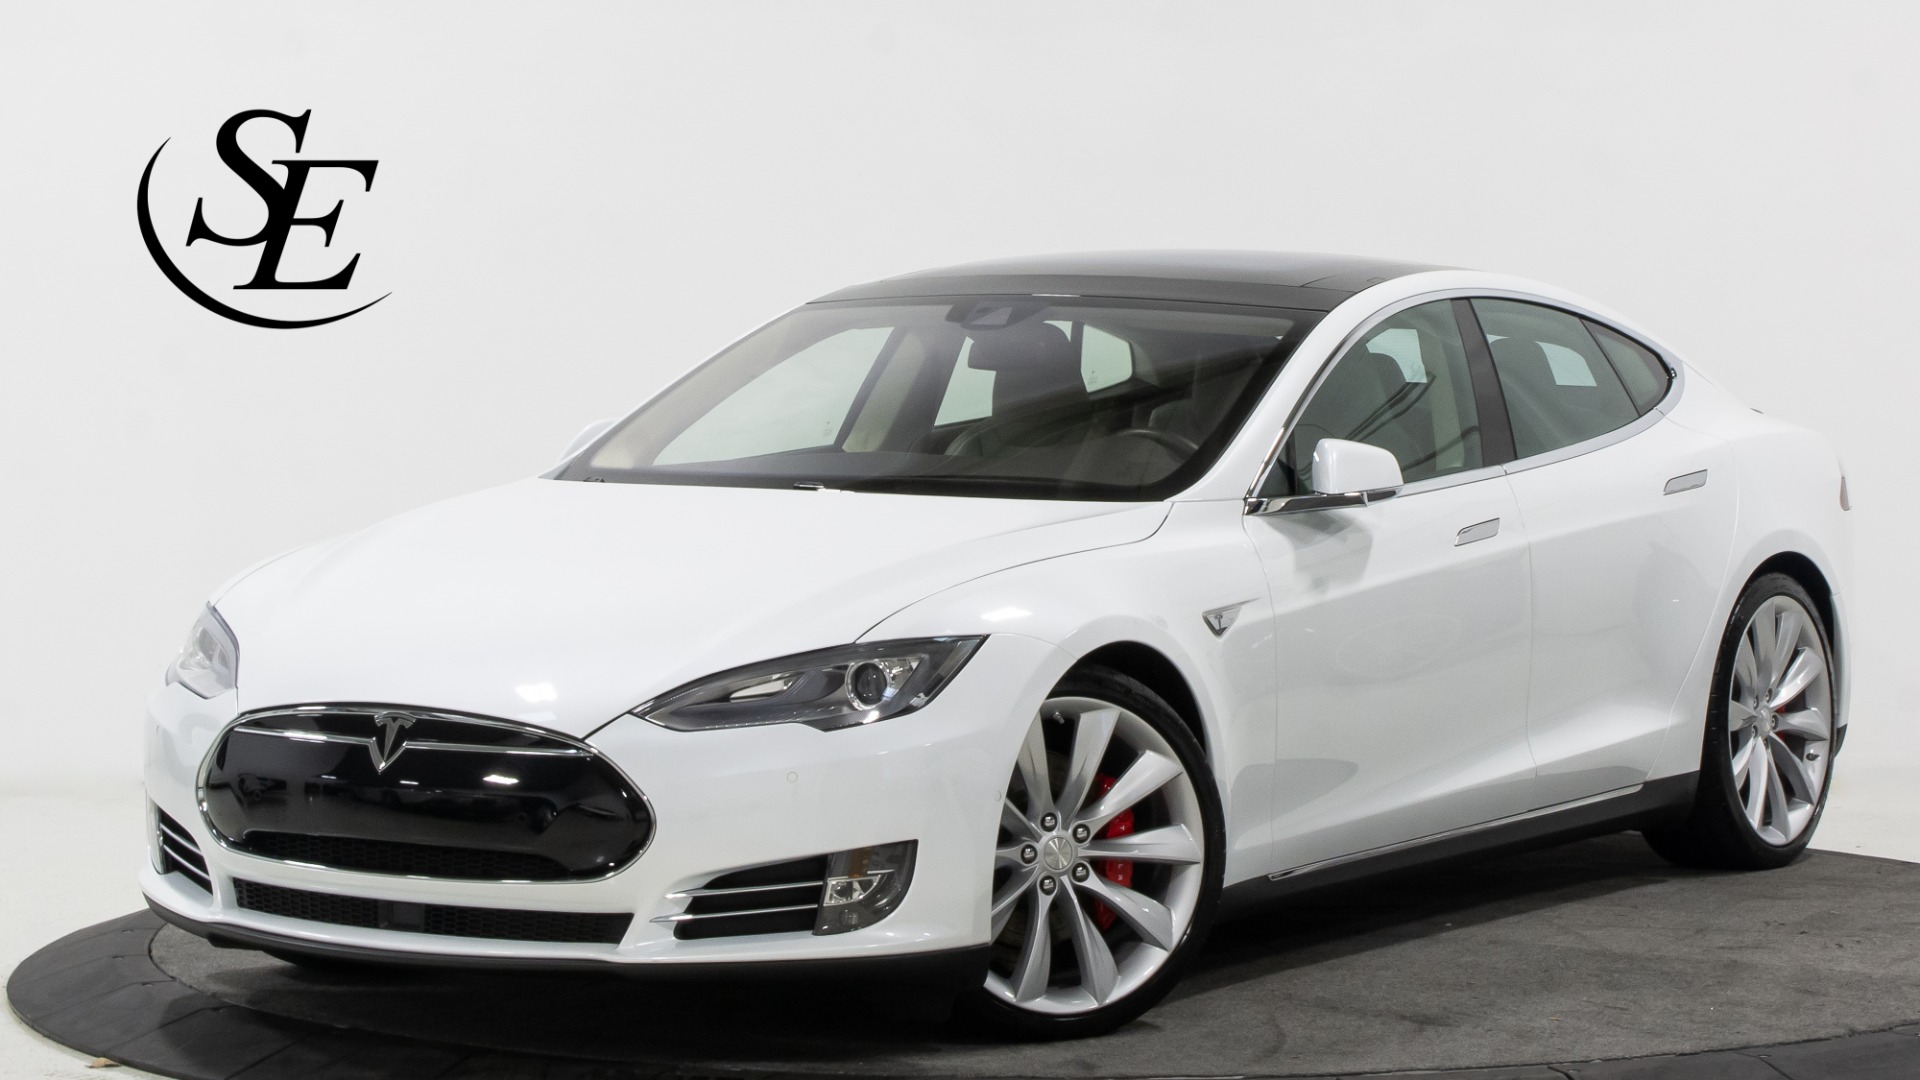 doe alstublieft niet favoriete per ongeluk 2015 Tesla Model S P90D $130K ORIGINAL MSRP! (SOLD) Stock # 22998 for sale  near Pompano Beach, FL | FL Tesla Dealer